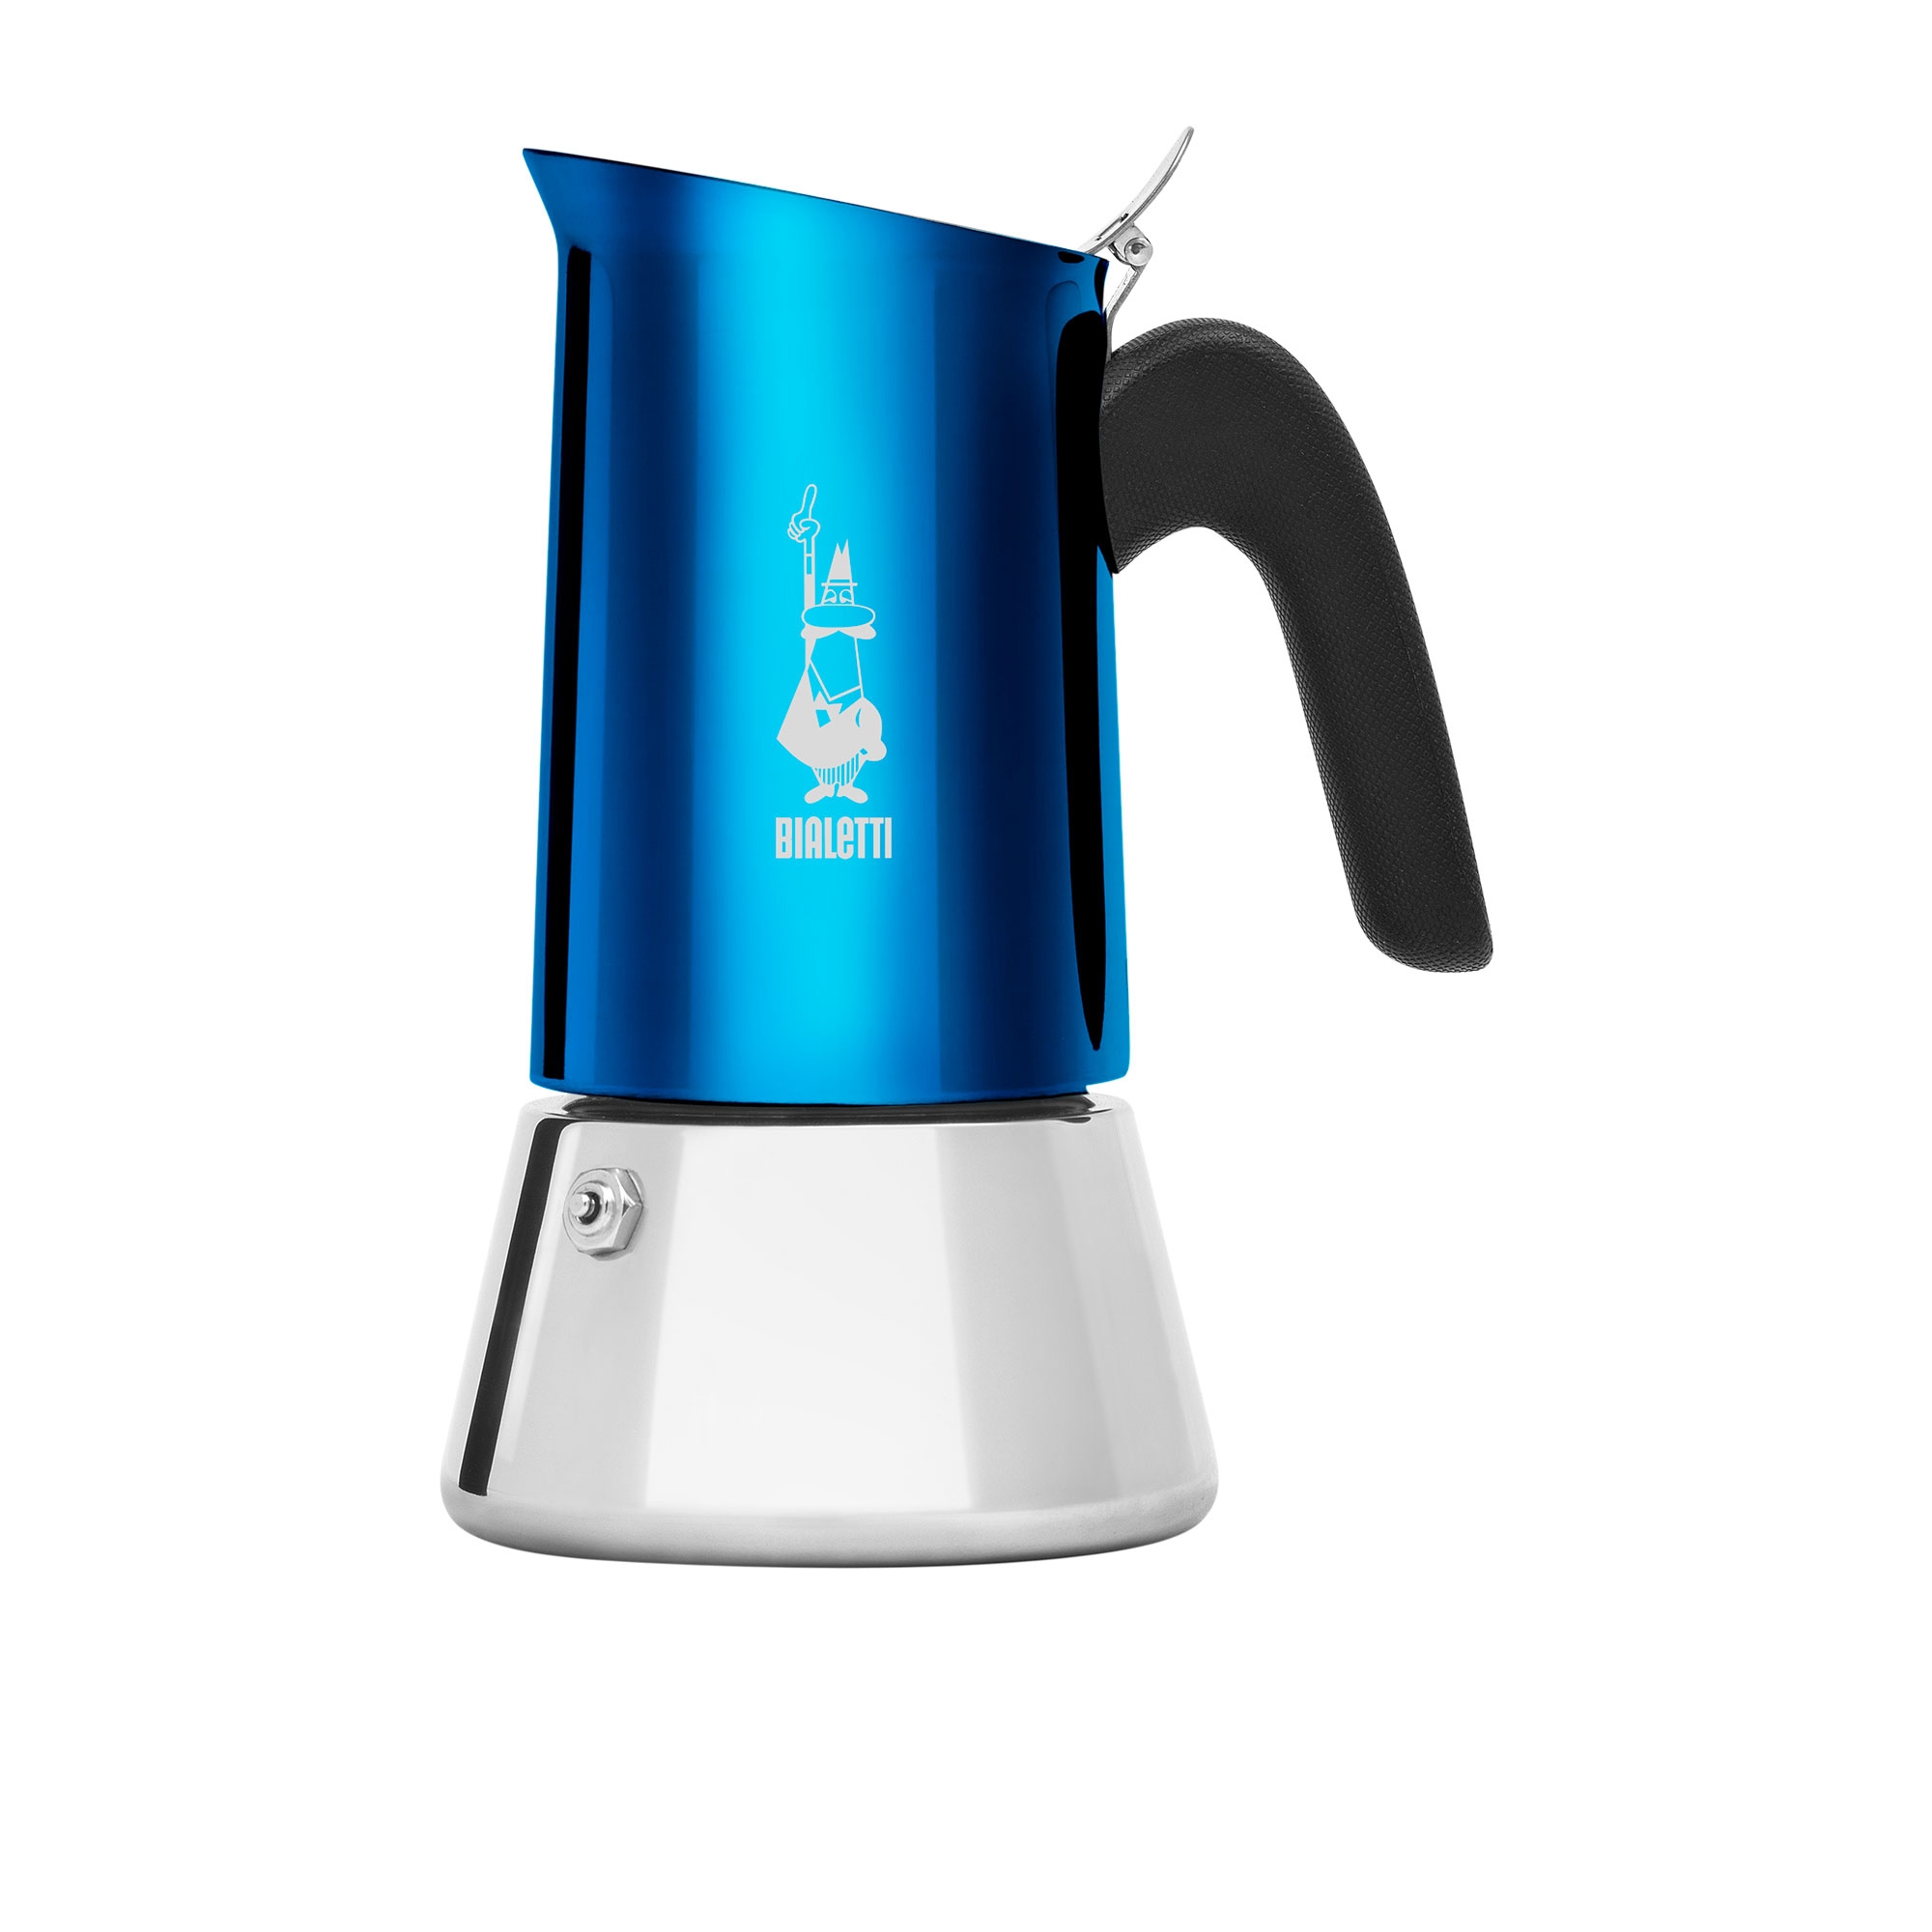 Bialetti Venus Induction Espresso Maker 6 Cup Blue Image 1